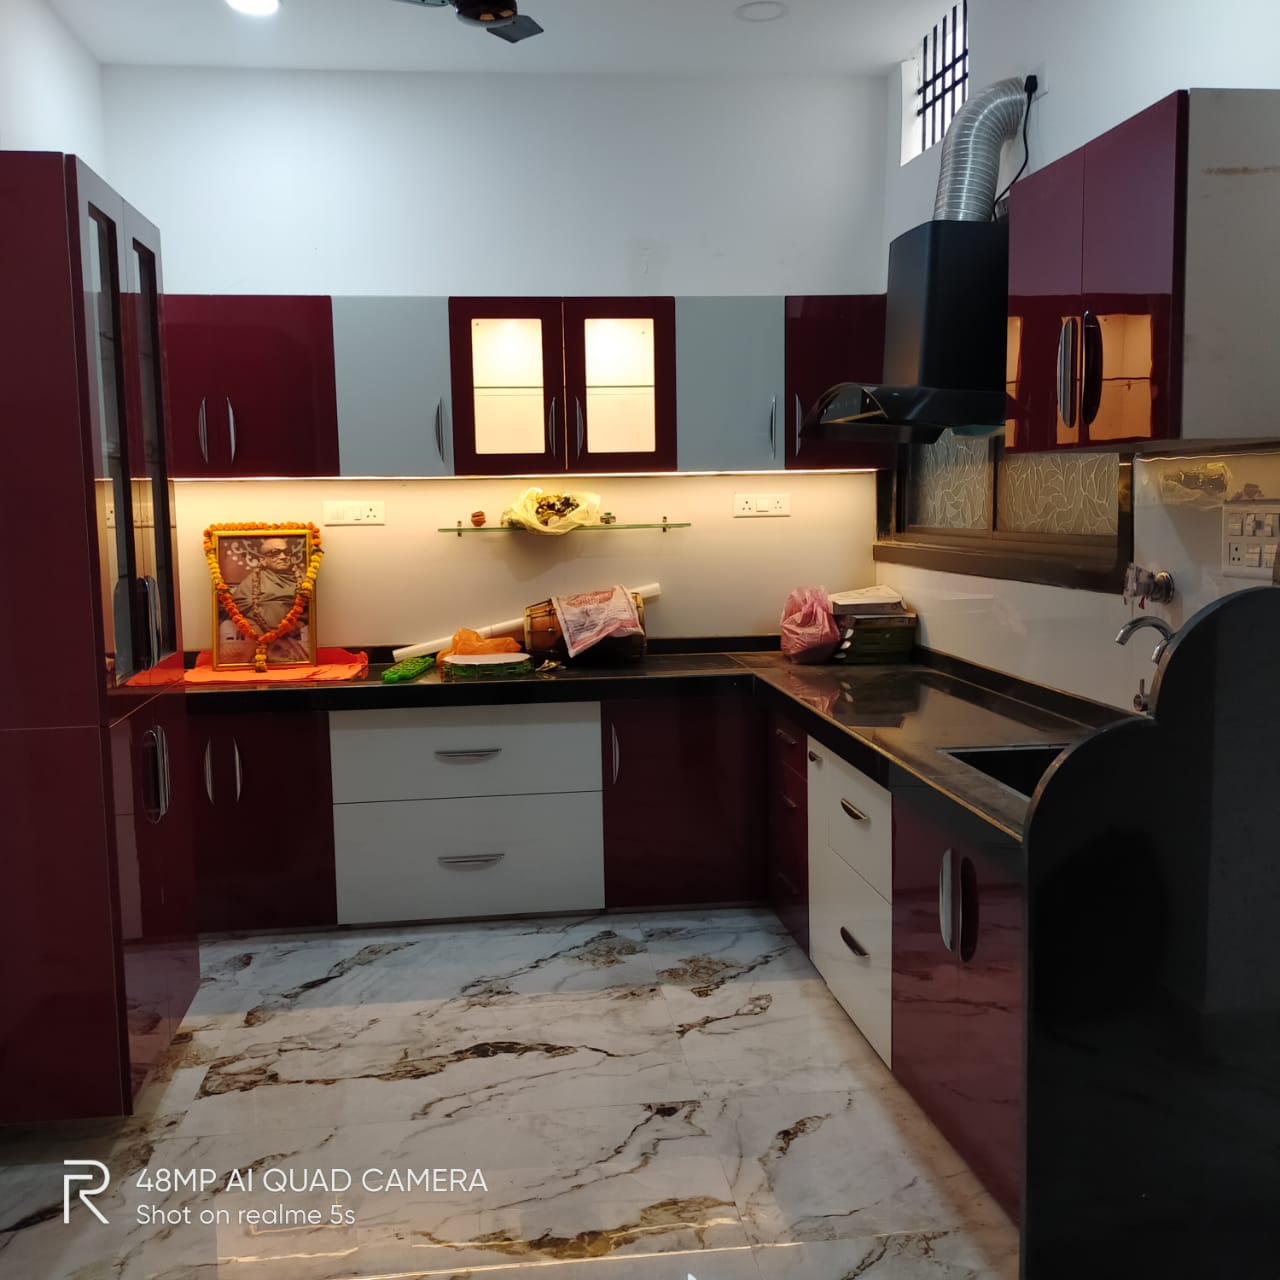 Modular Kitchen in Raipur